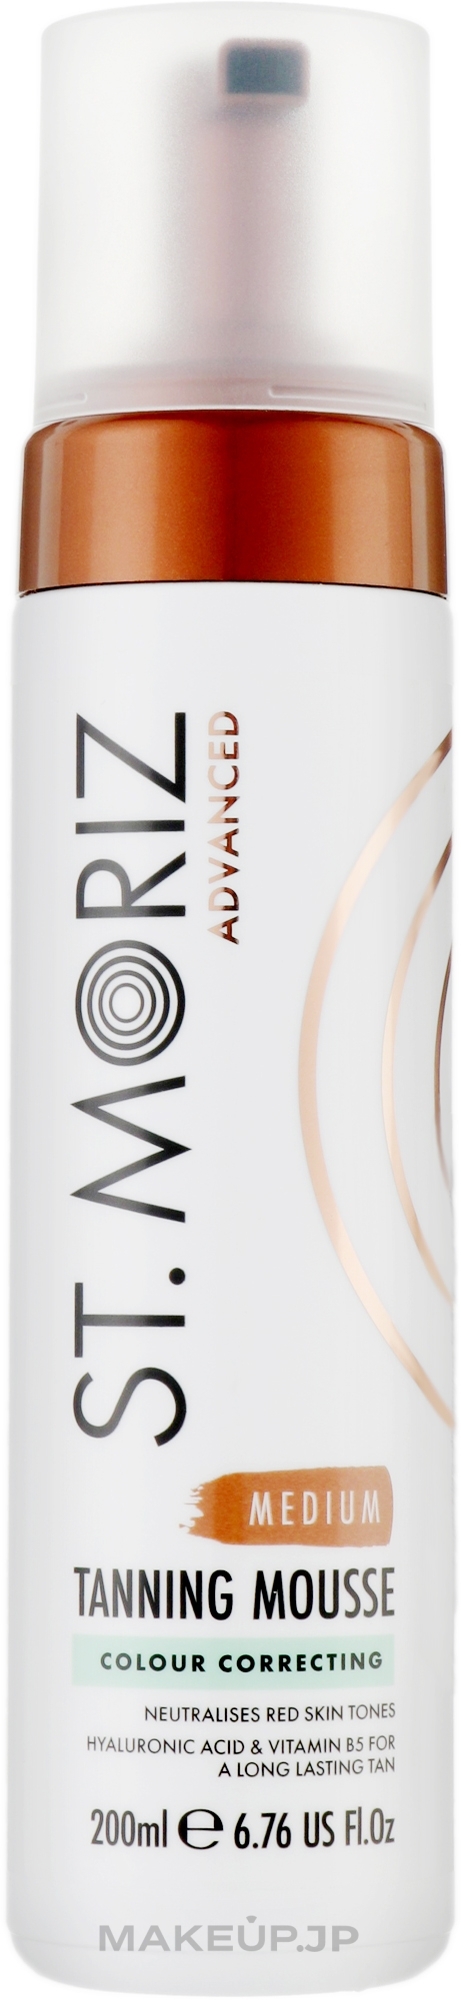 Self-tanning Correction Mousse, Medium - St. Moriz Advanced Colour Correcting Tanning Mousse Medium — photo 200 ml